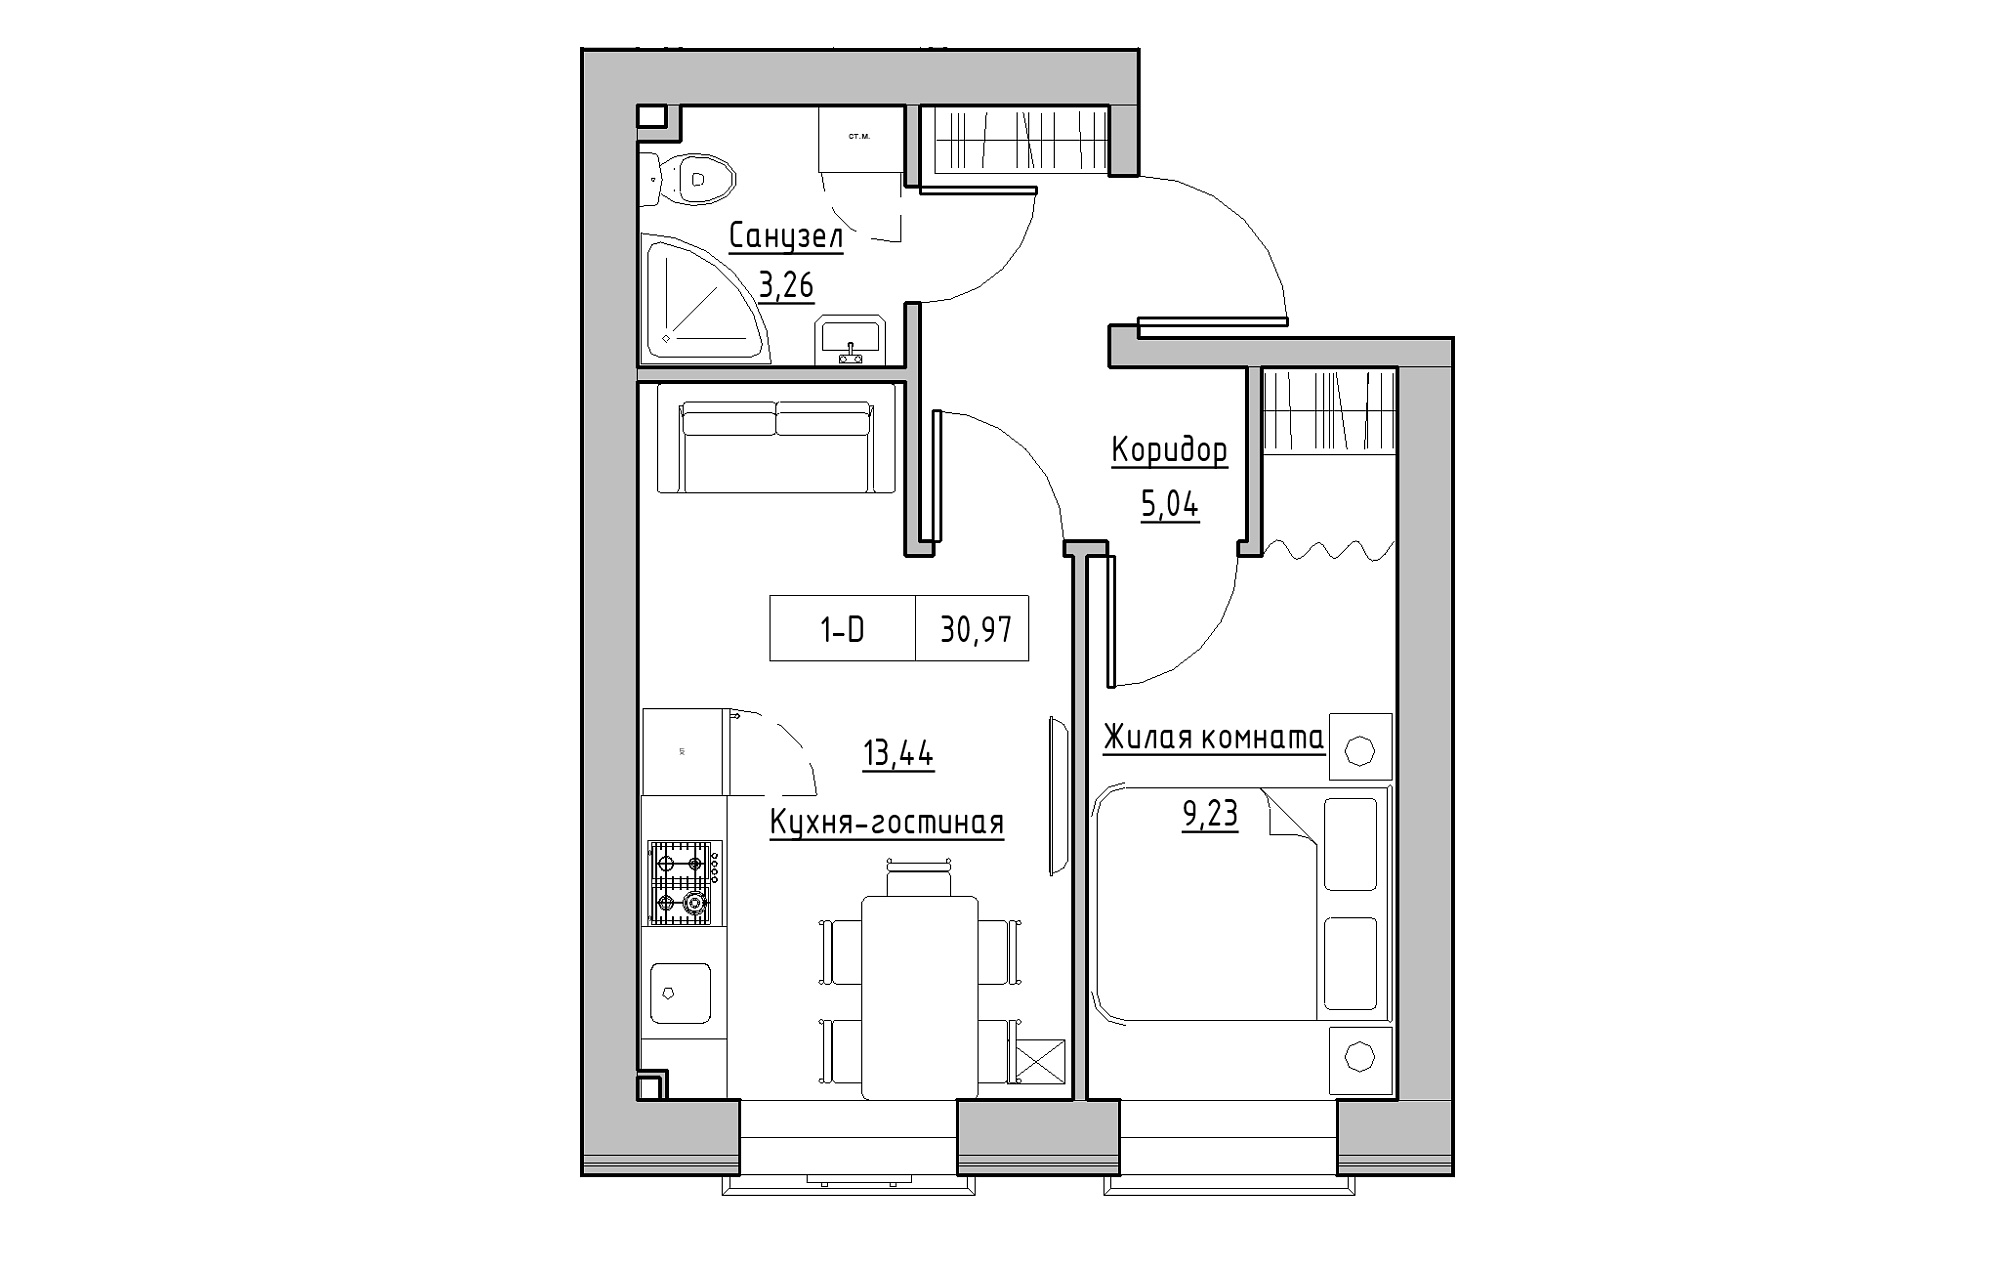 Planning 1-rm flats area 30.97m2, KS-018-01/0003.